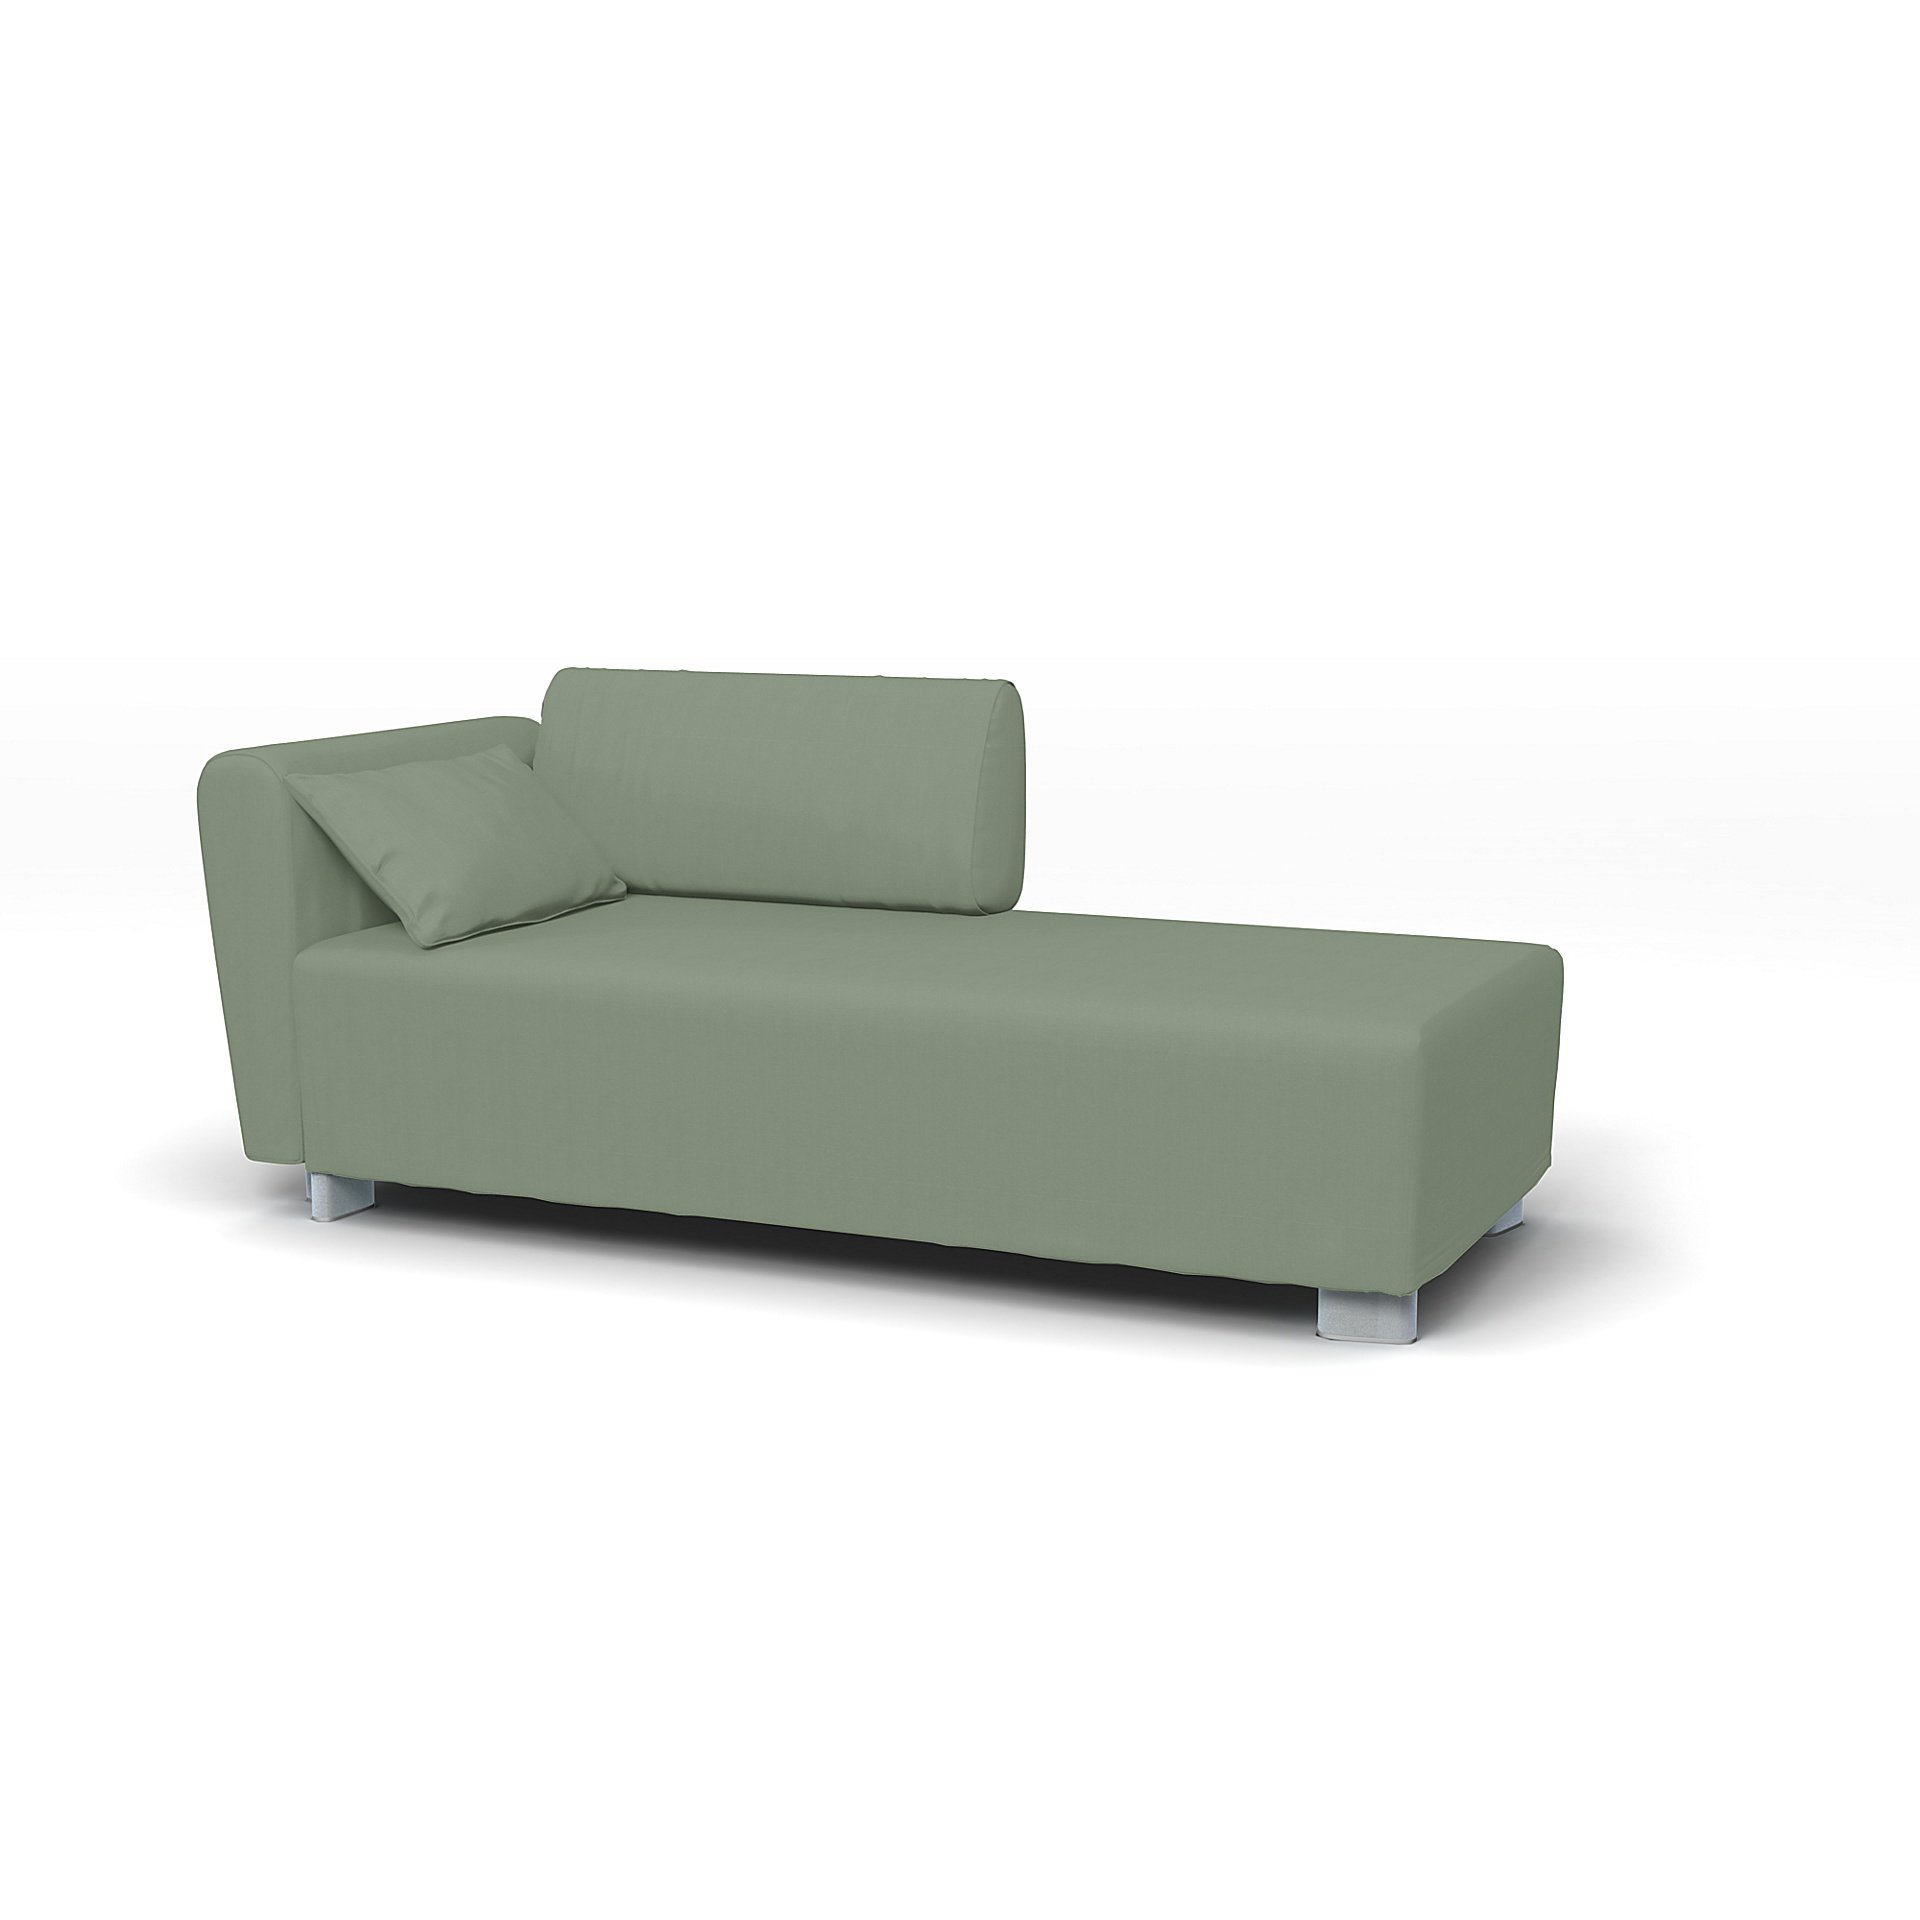 IKEA - Mysinge Chaise Longue with Armrest Cover, Seagrass, Cotton - Bemz